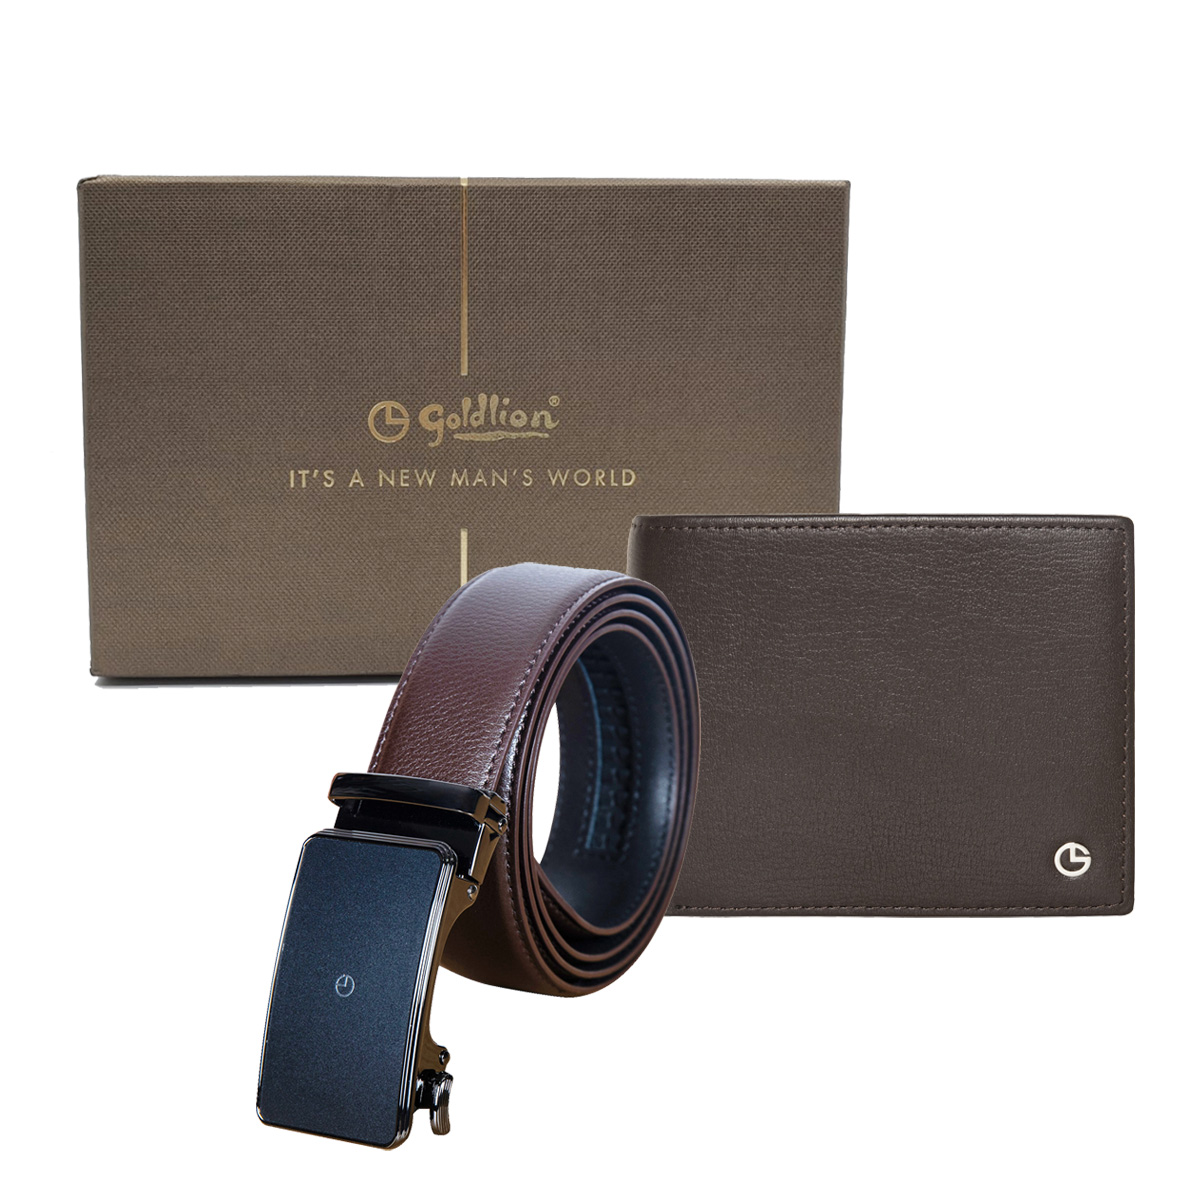 [Online Exclusive] Goldlion Genuine Leather 9 Cards Slot Wallet & Auto Lock Belt Gift Set